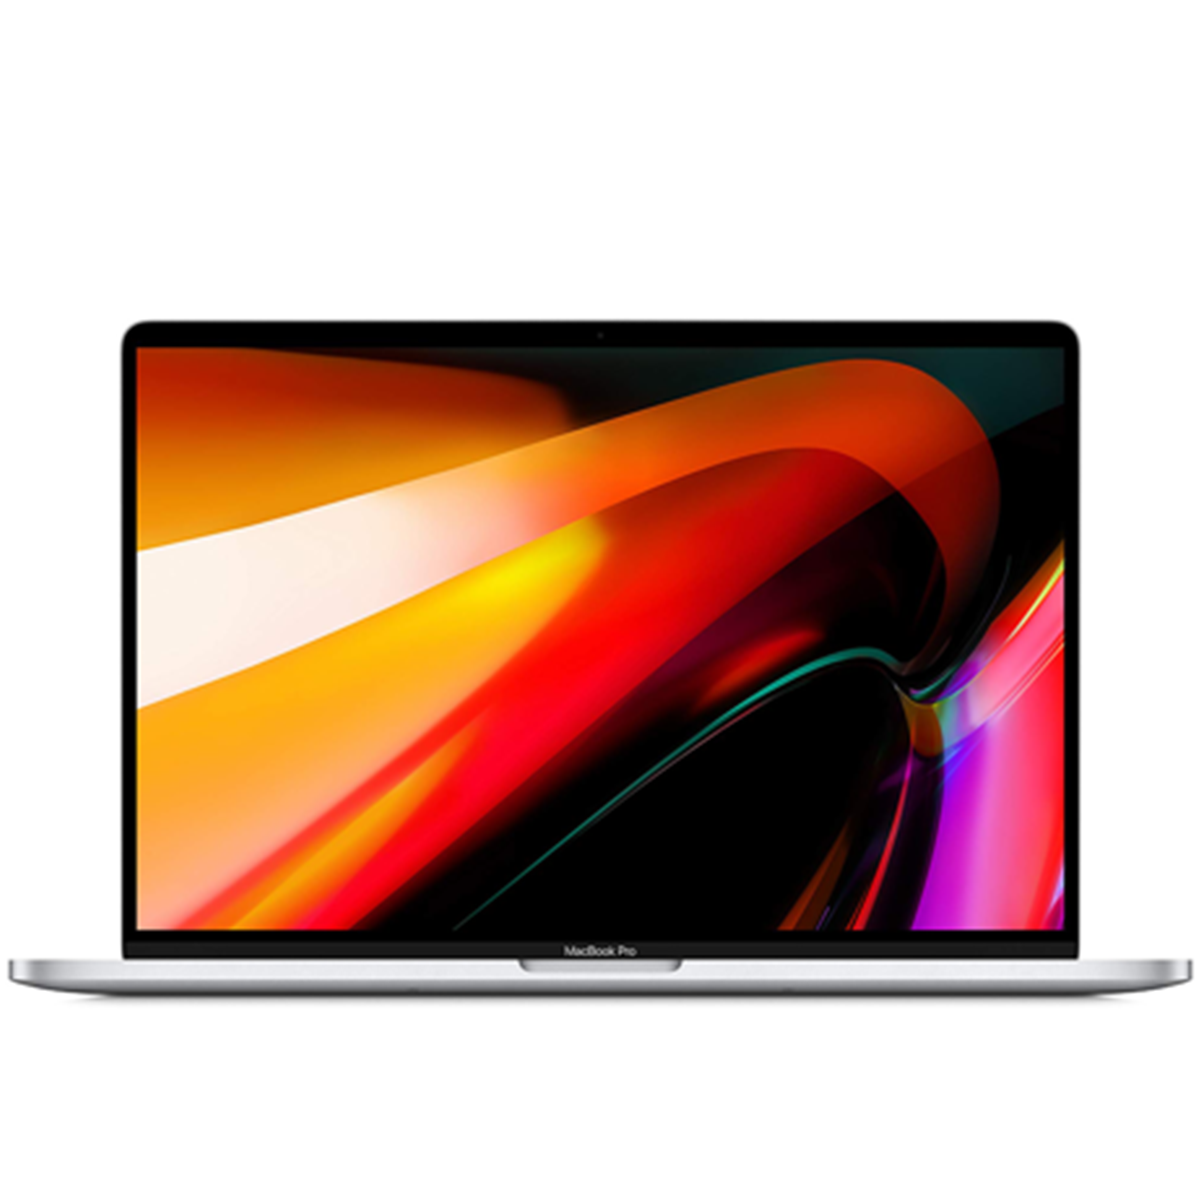  MacBook Pro 16 inch 2019 TouchBar 2.6GHz Core i7 512GB 